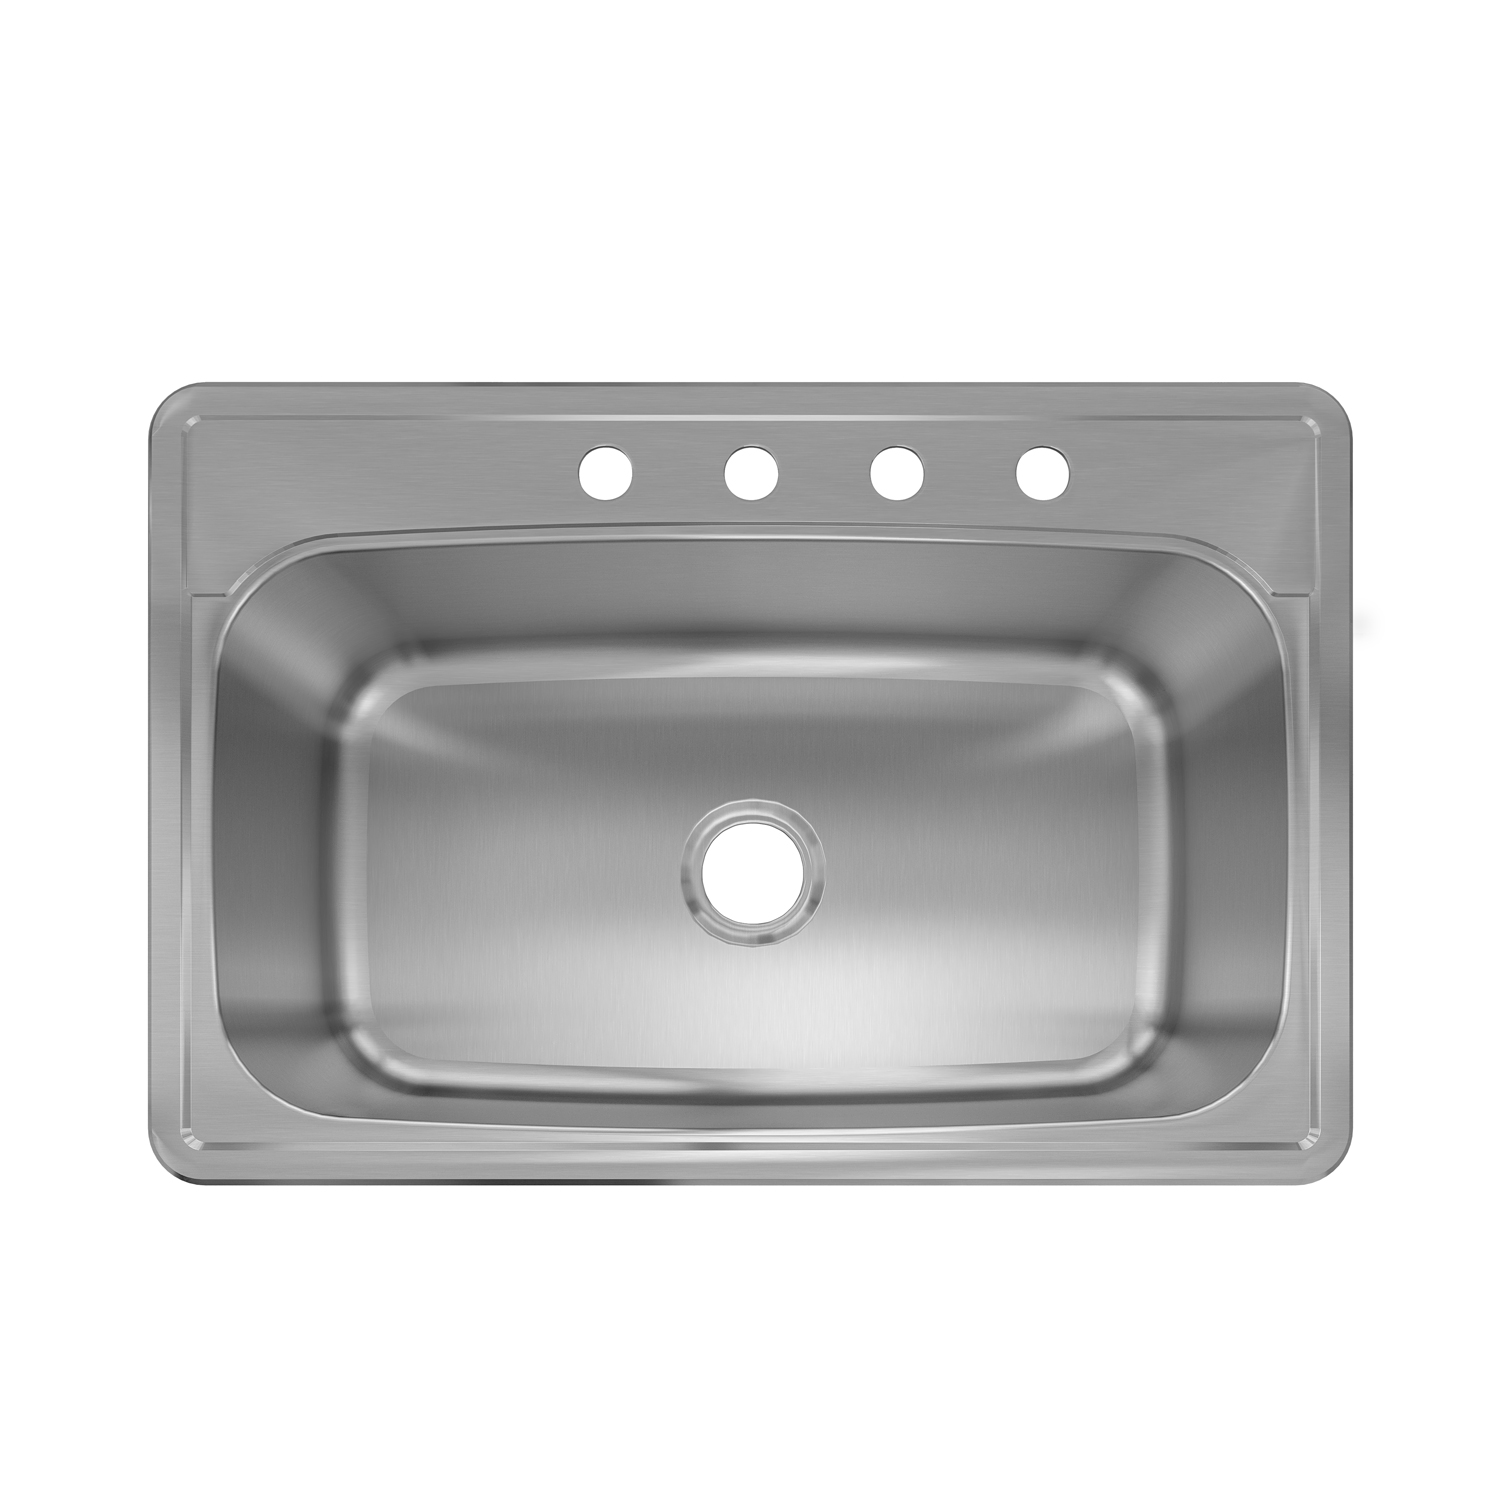 Duko MT3322C Drop in 18 Gauge Single Bowl 304 Stainless Steel Kitchen Sink